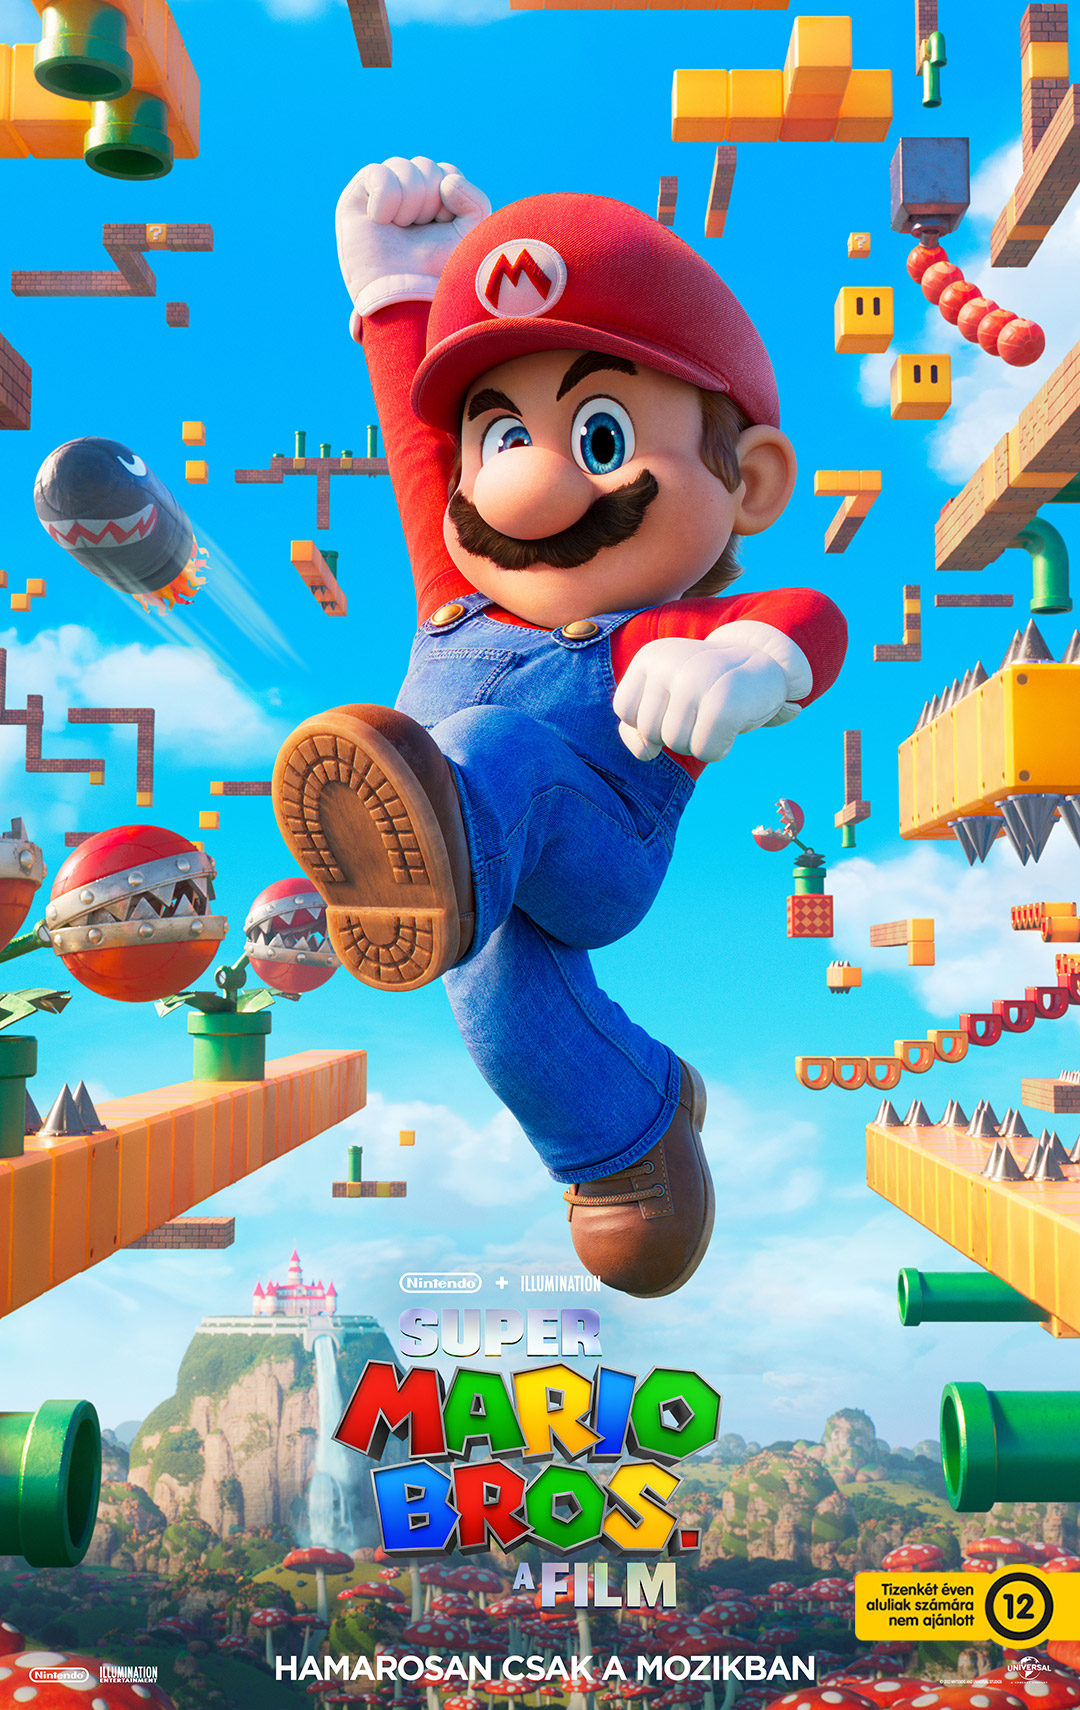 Super Mario Bros: A film